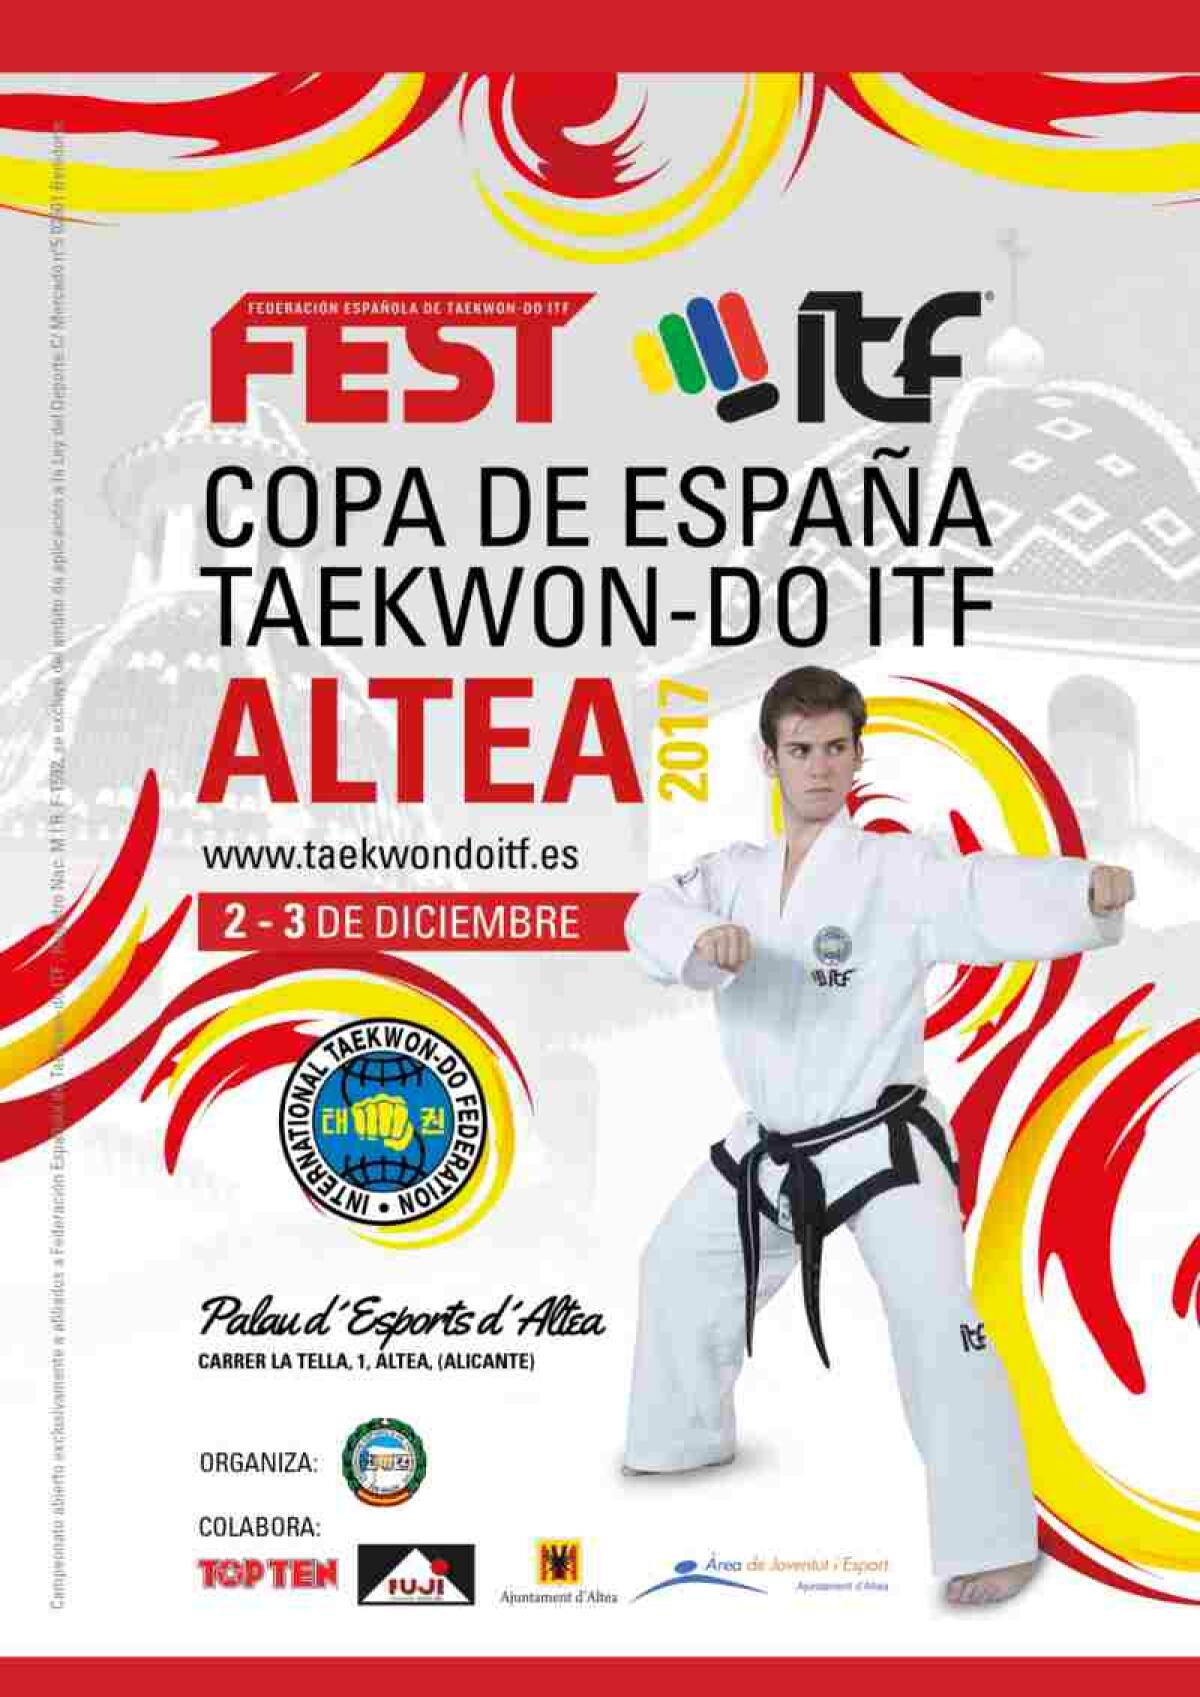 Altea acogerá los días 2 y 3 de diciembre la Copa de España de Taekwon-do ITF